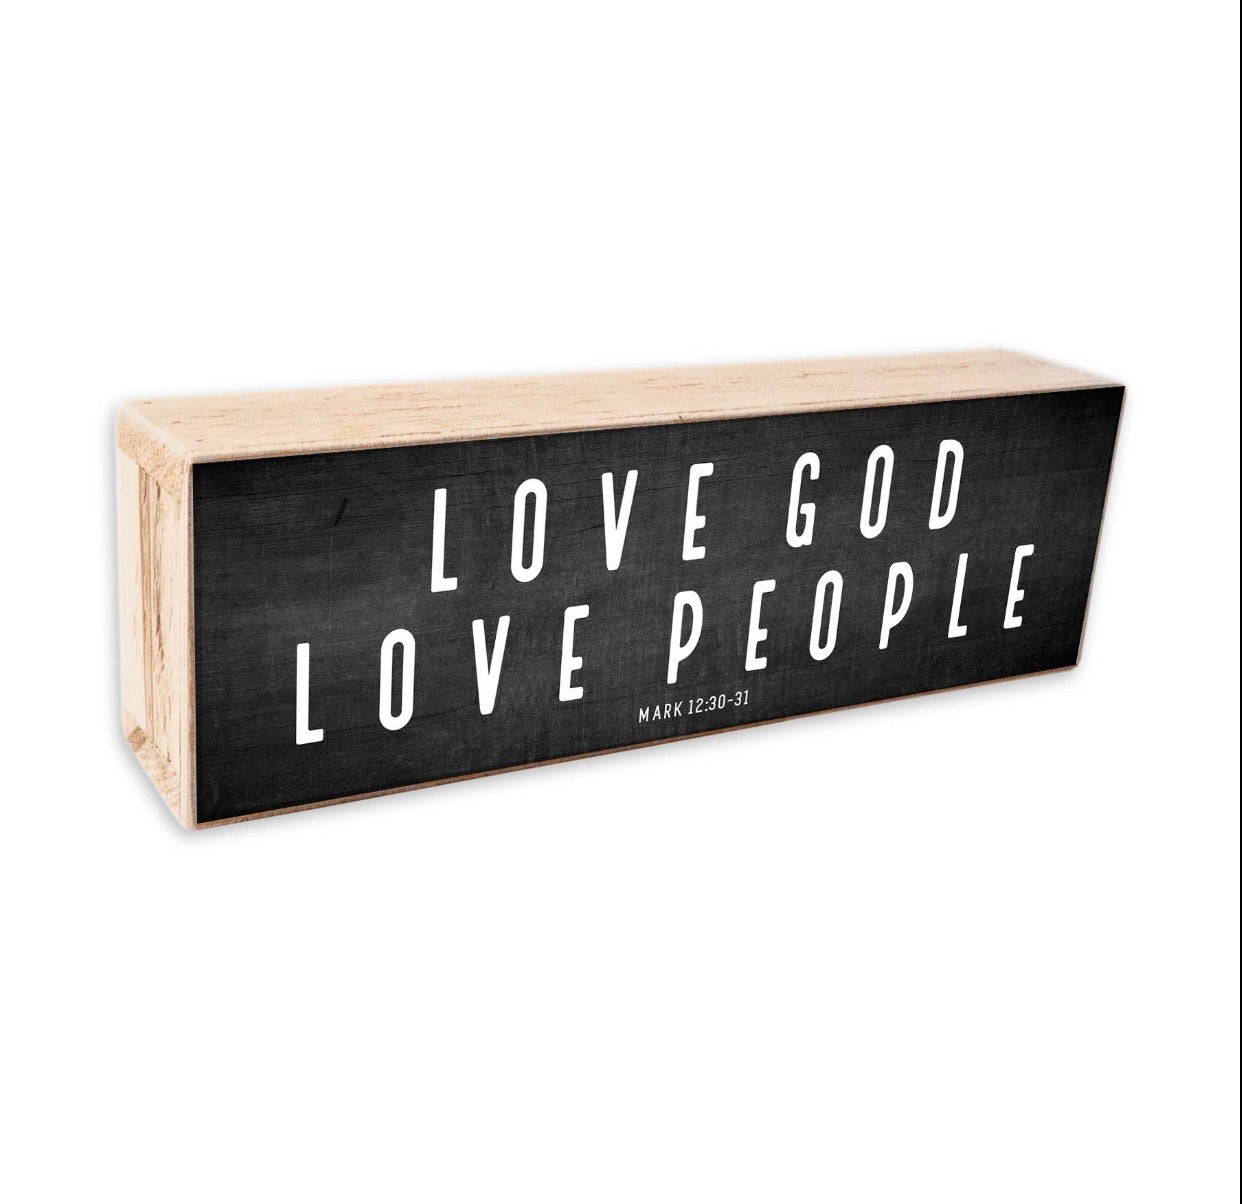 Love God Love People Sign